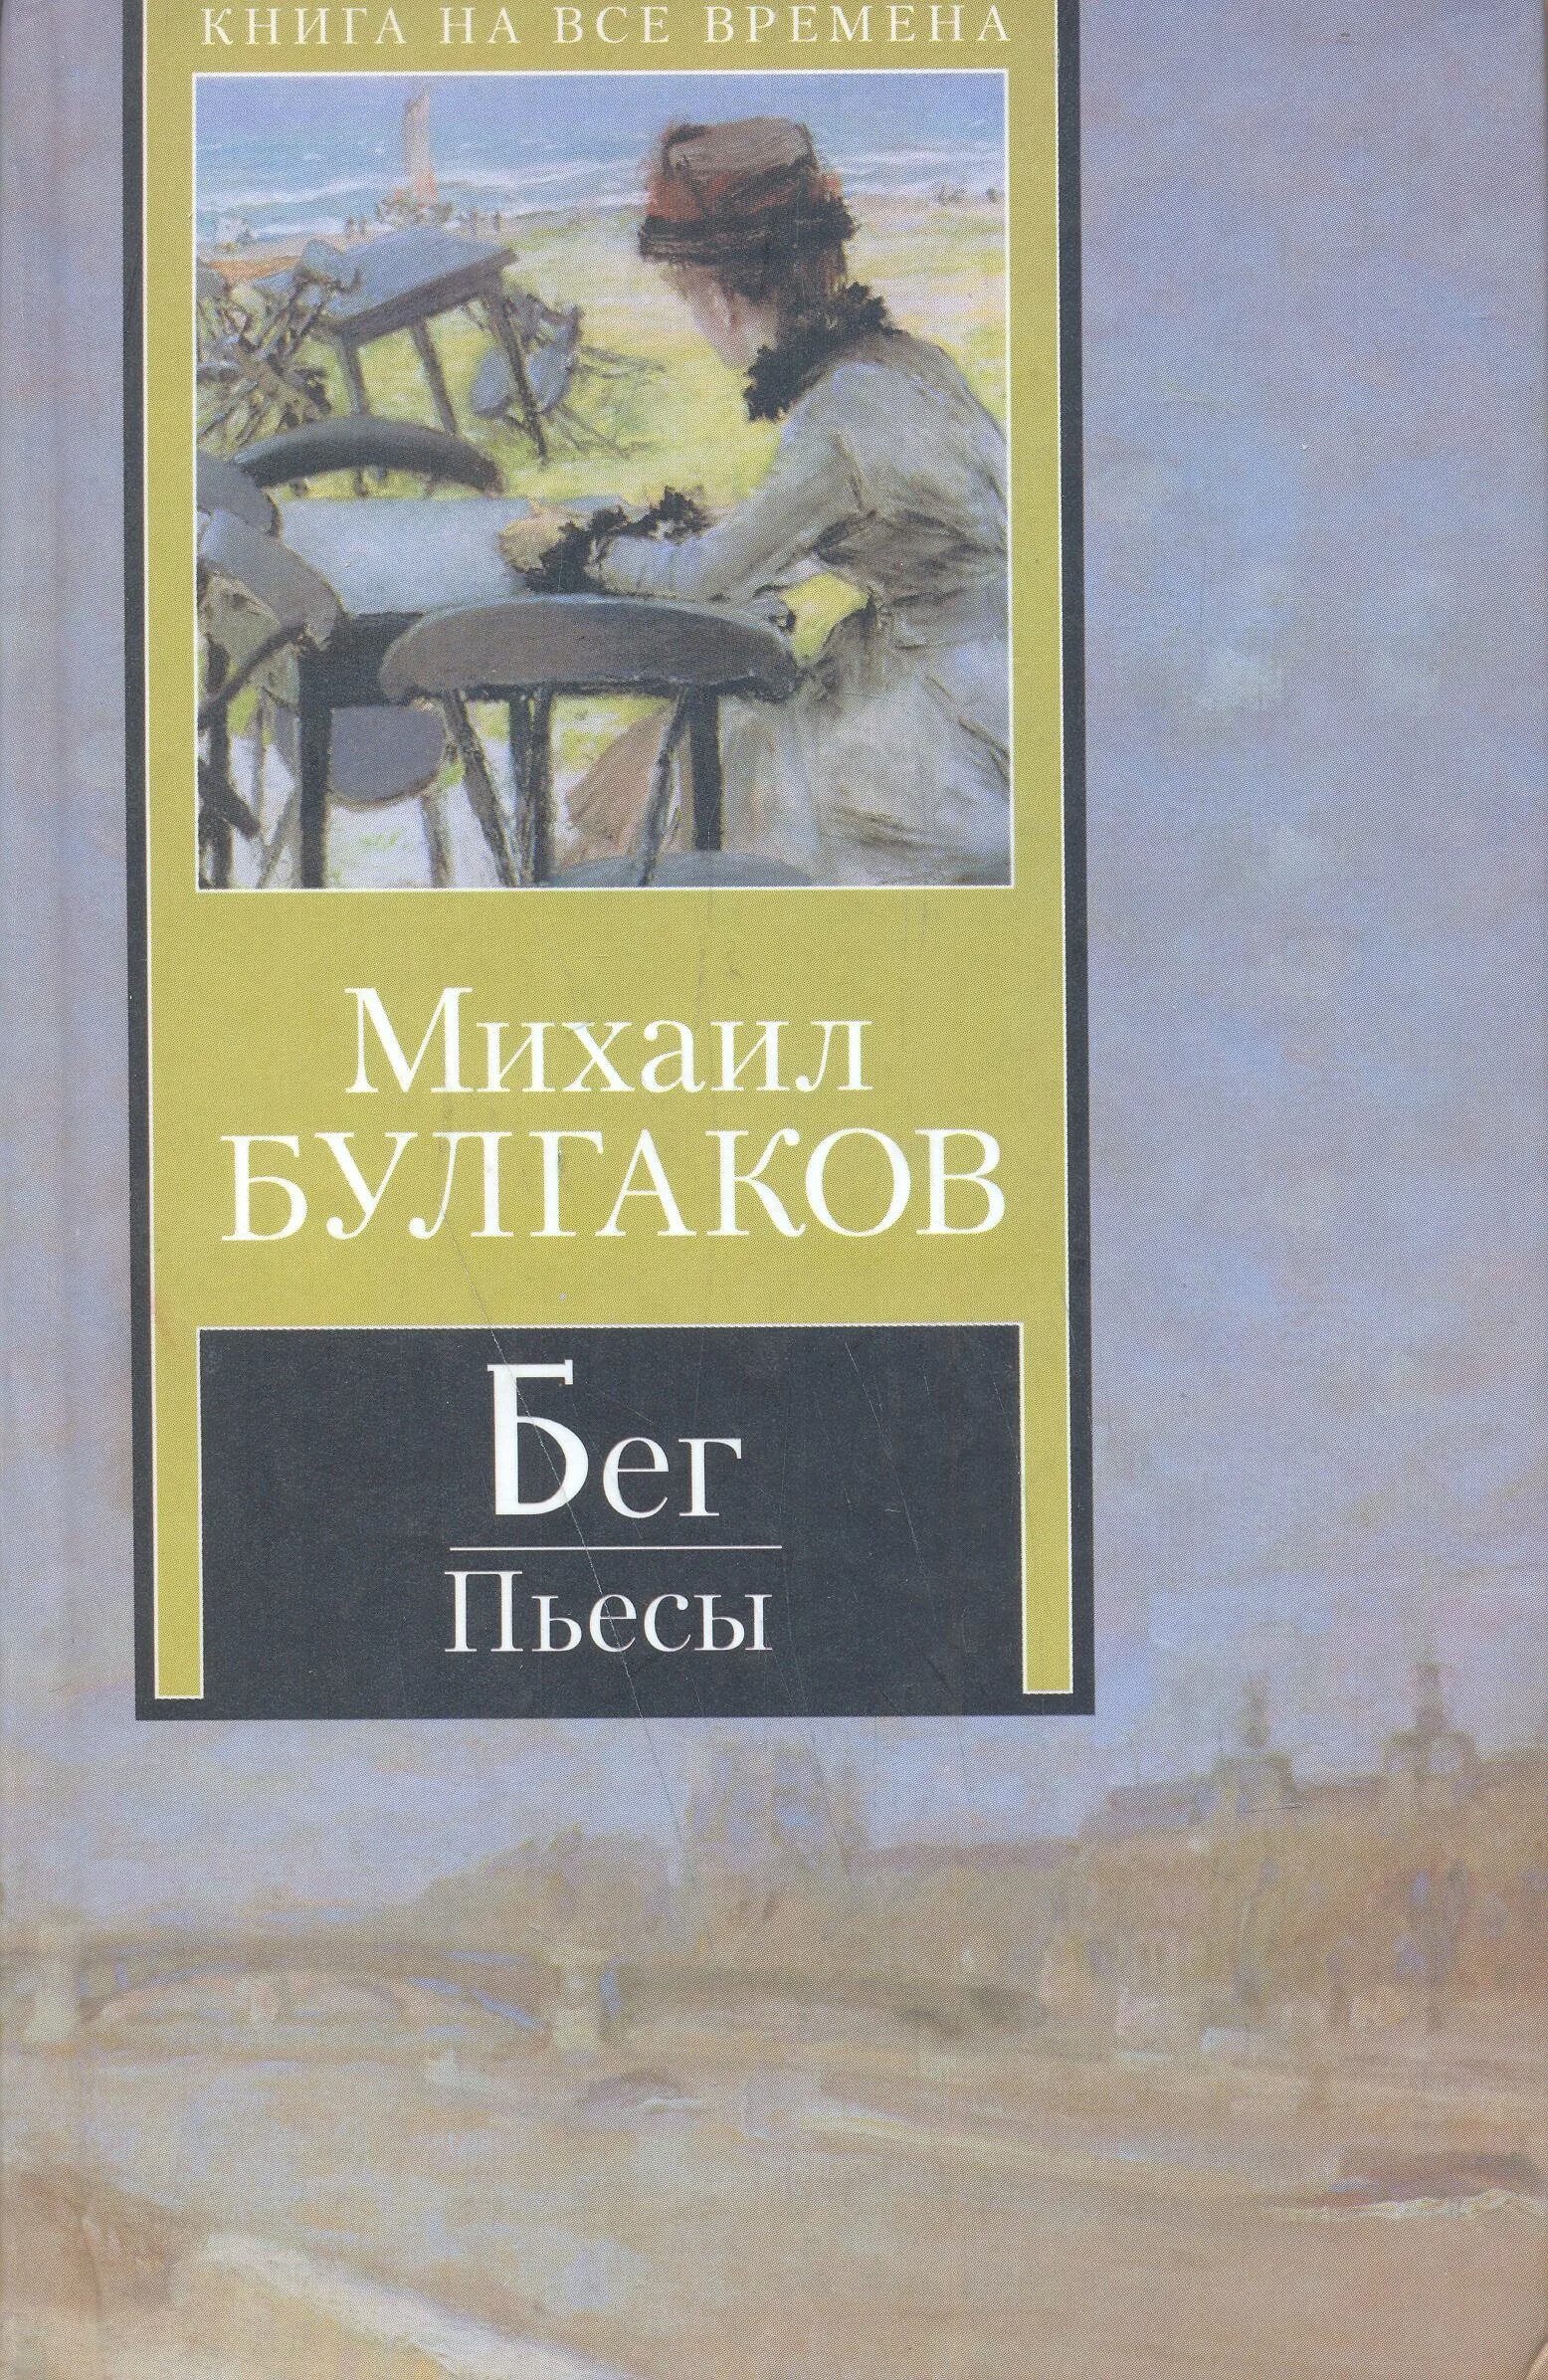 Другие произведения булгакова. Обложка книга бег Булгакова.